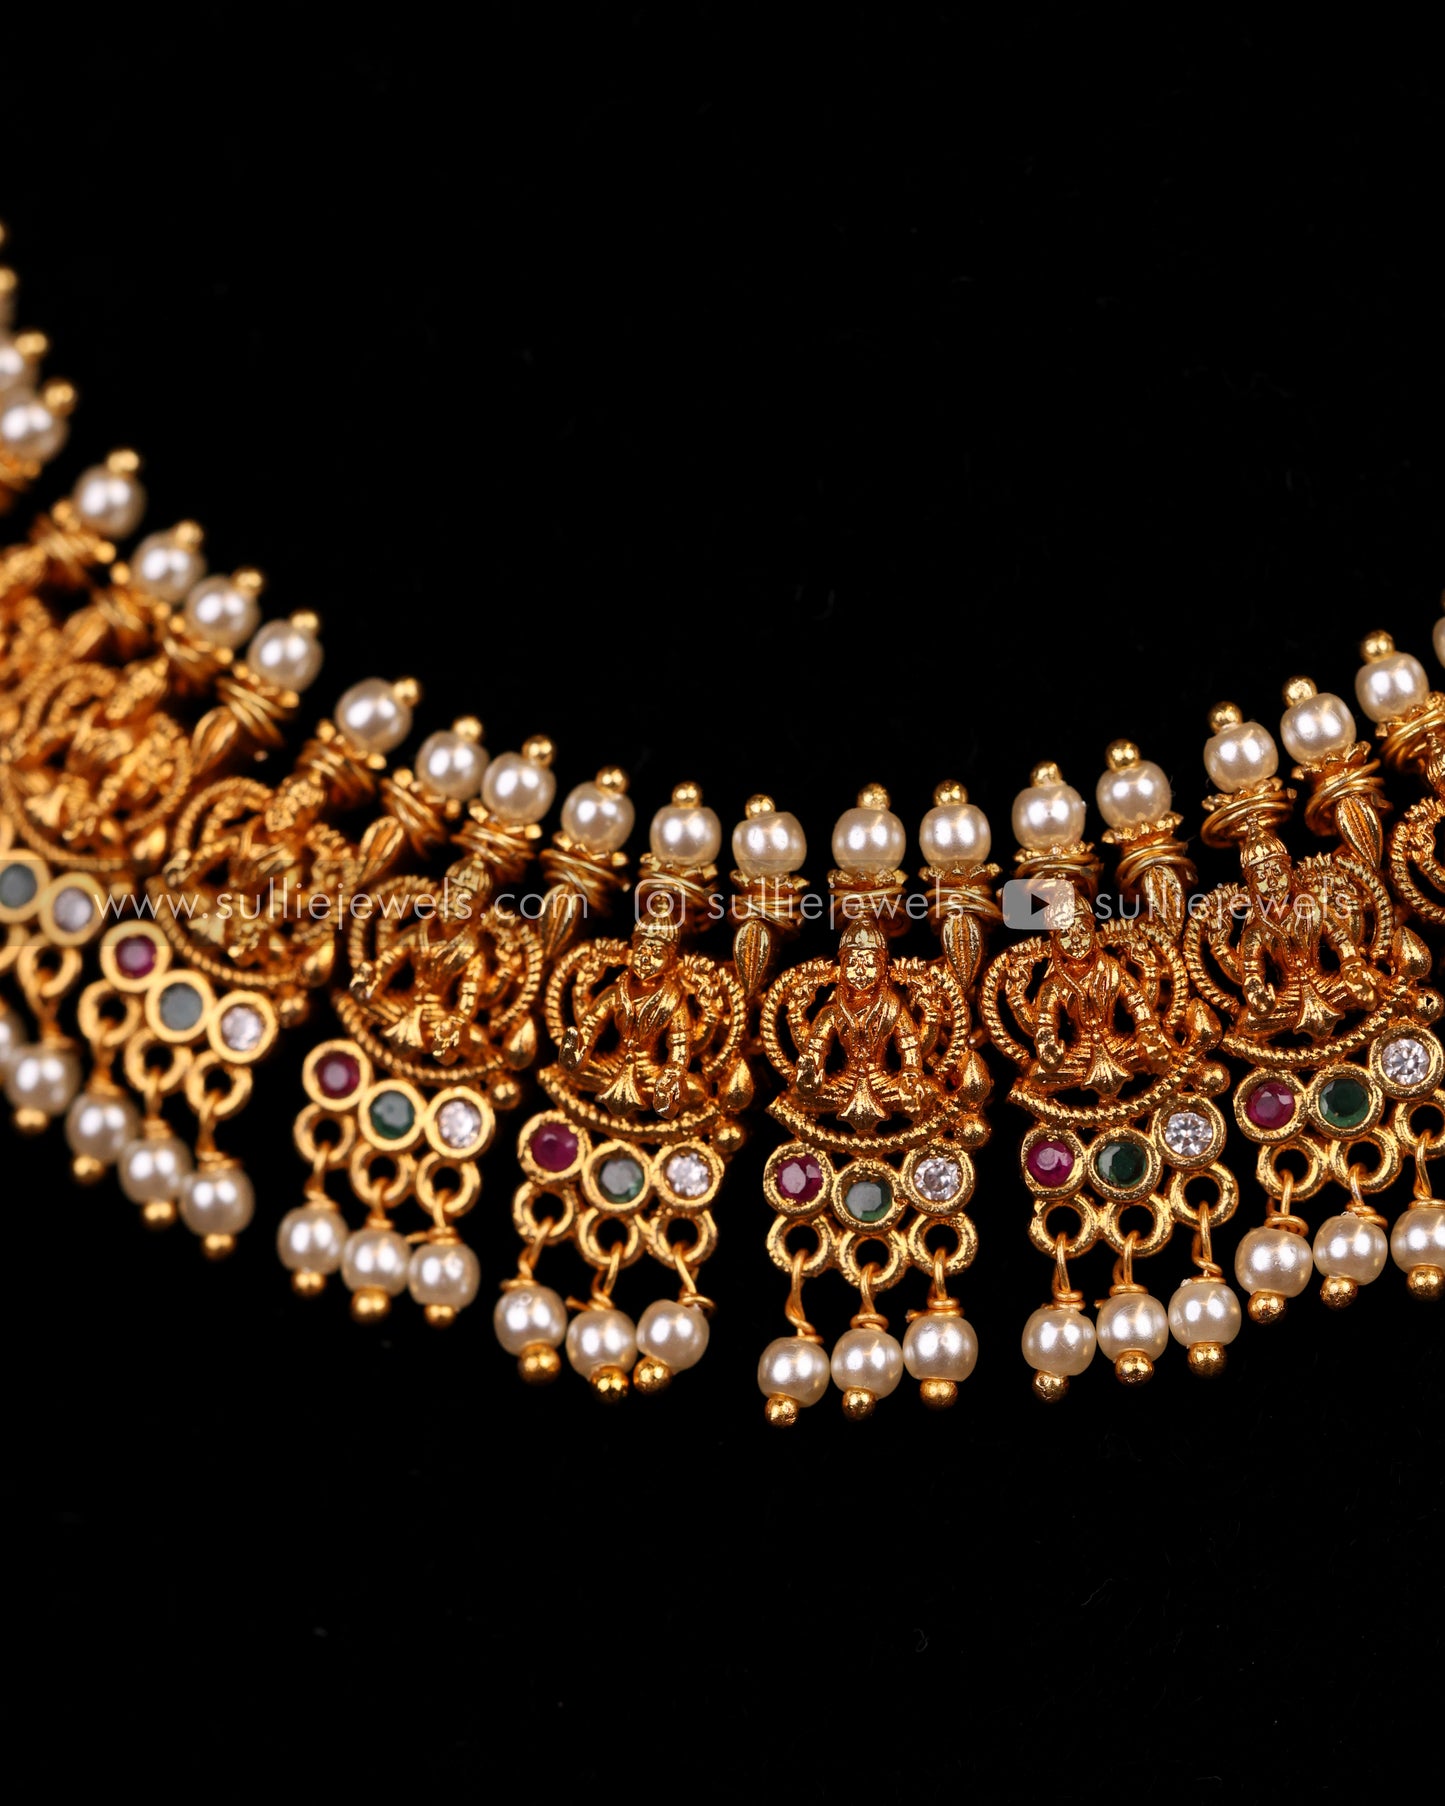 Detailed Lakshmi Design with Pearl drops Necklace Set